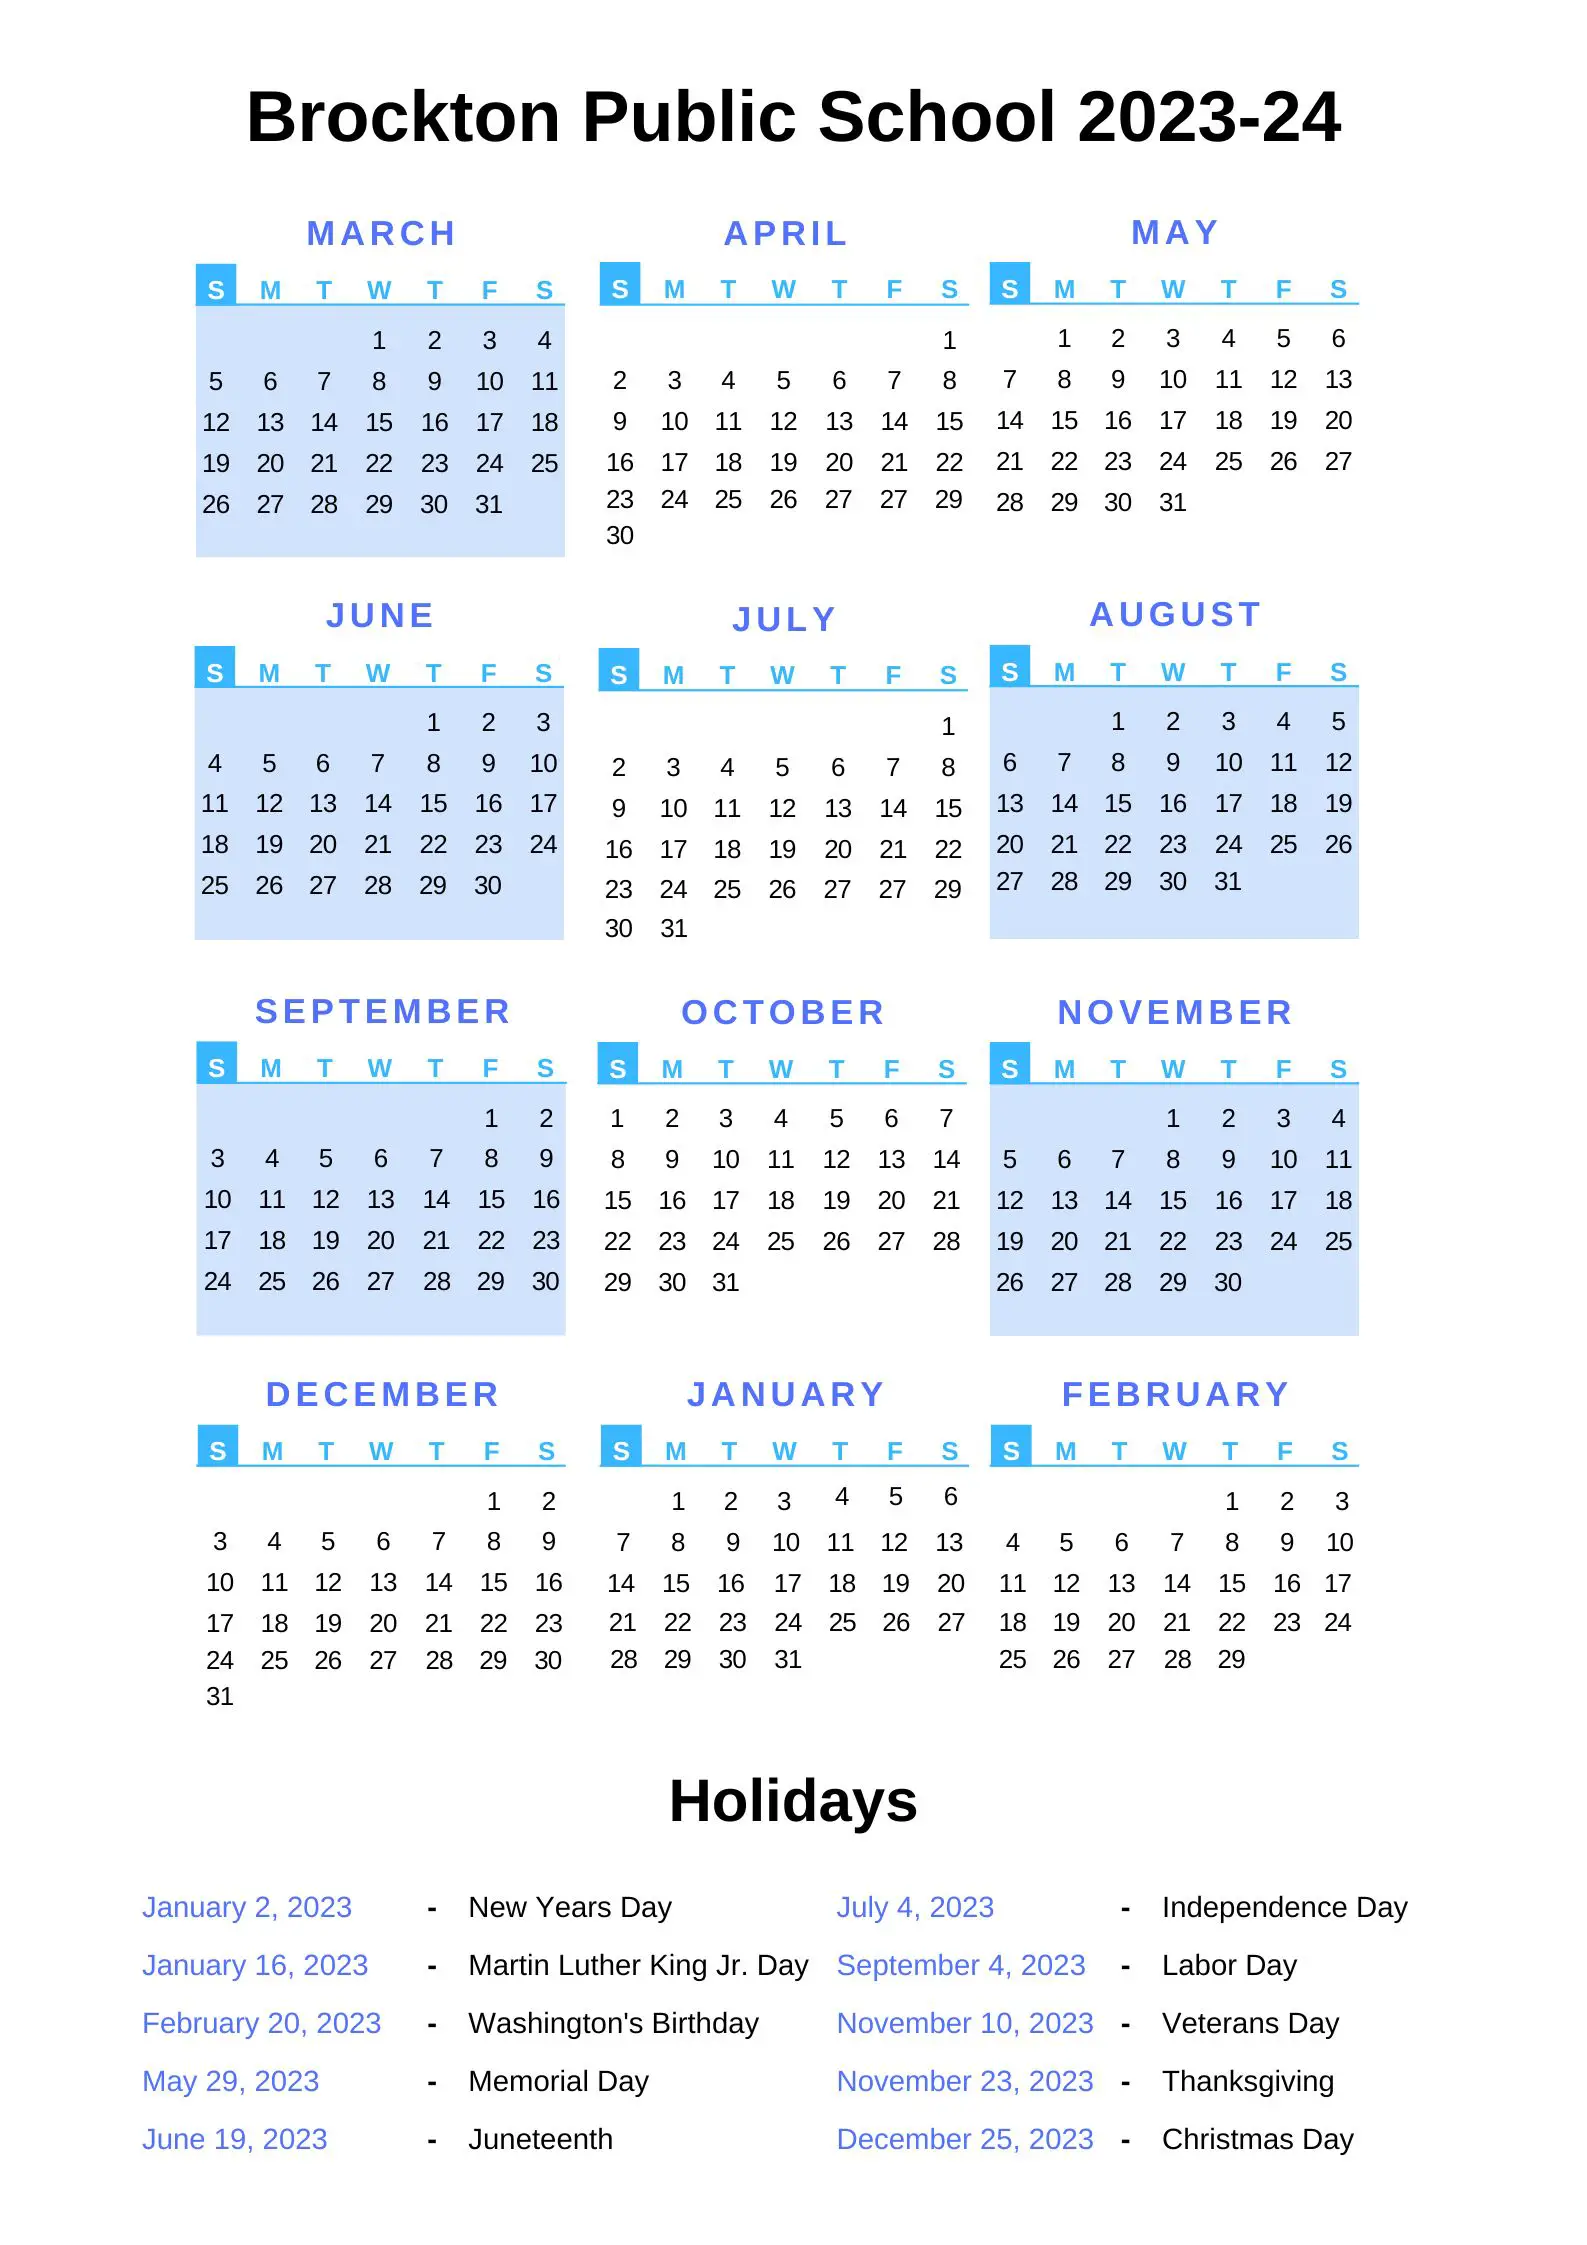 Brockton Public Schools Calendar 202324 With Holidays